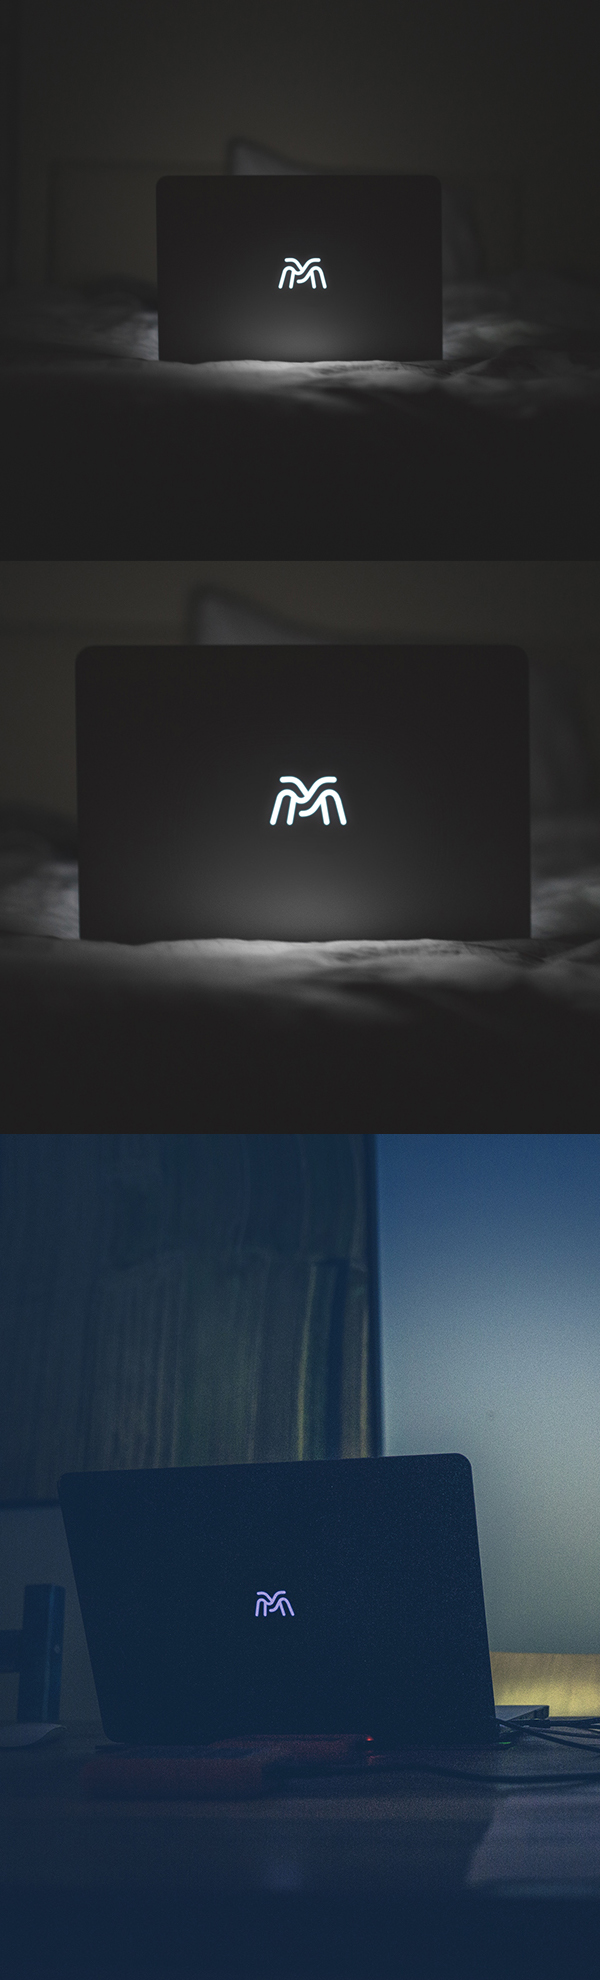 Free Backlight Macbook Logo Mockup